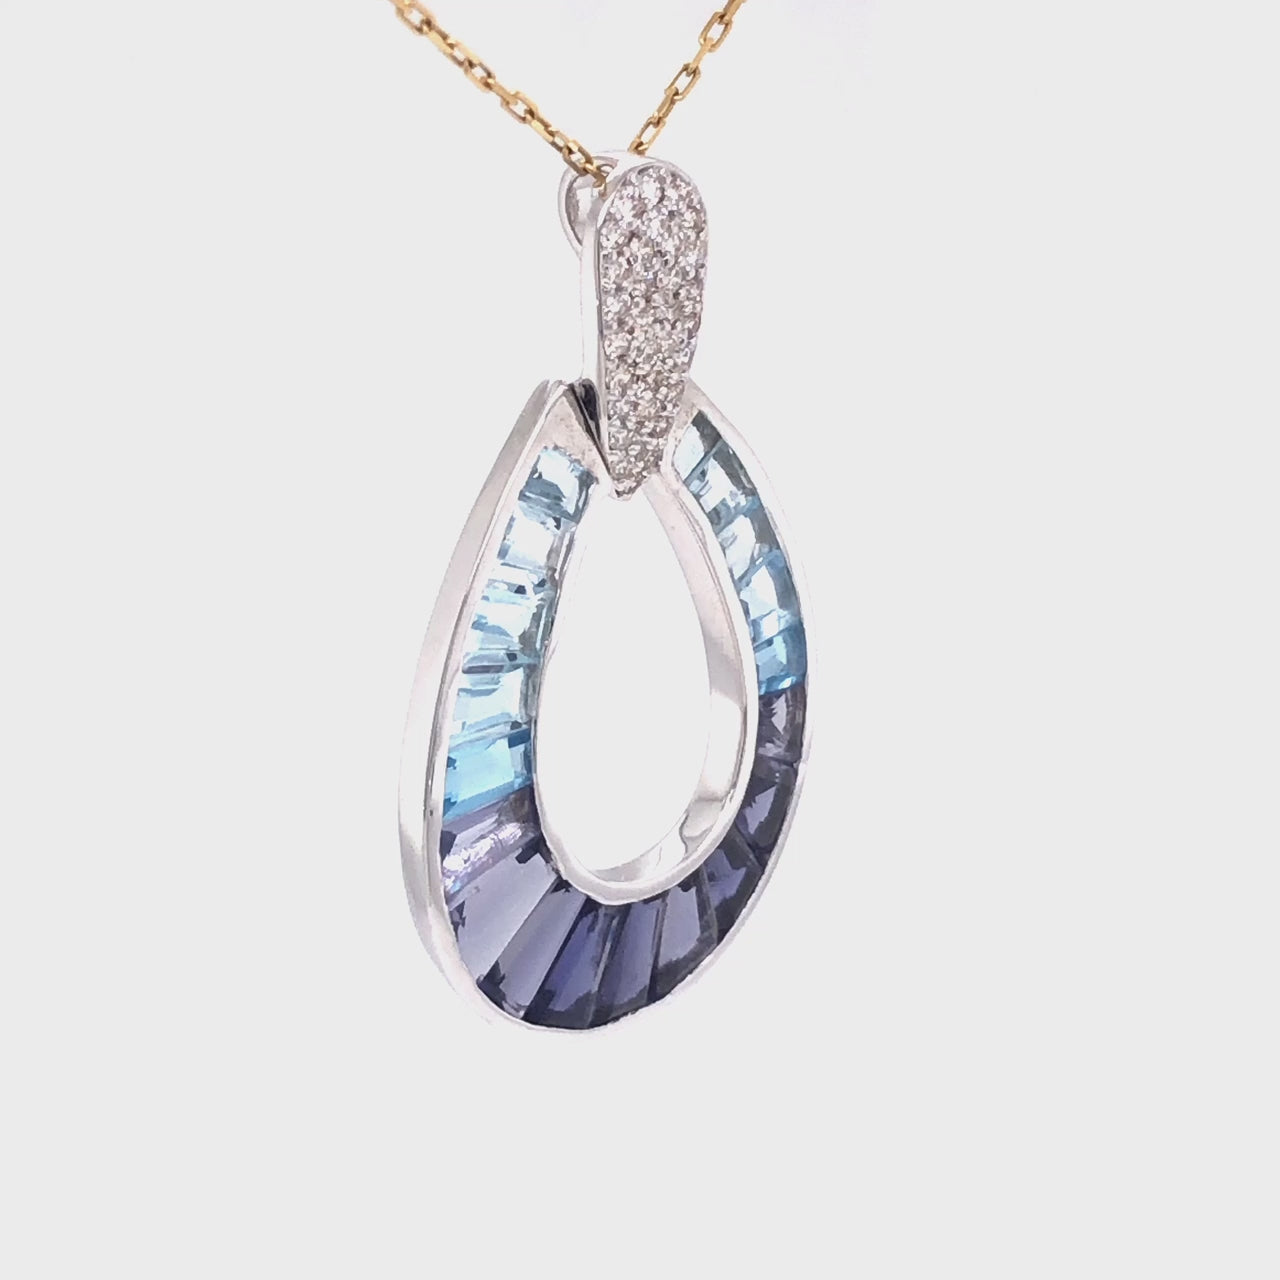 Iolite pendant with diamond silver